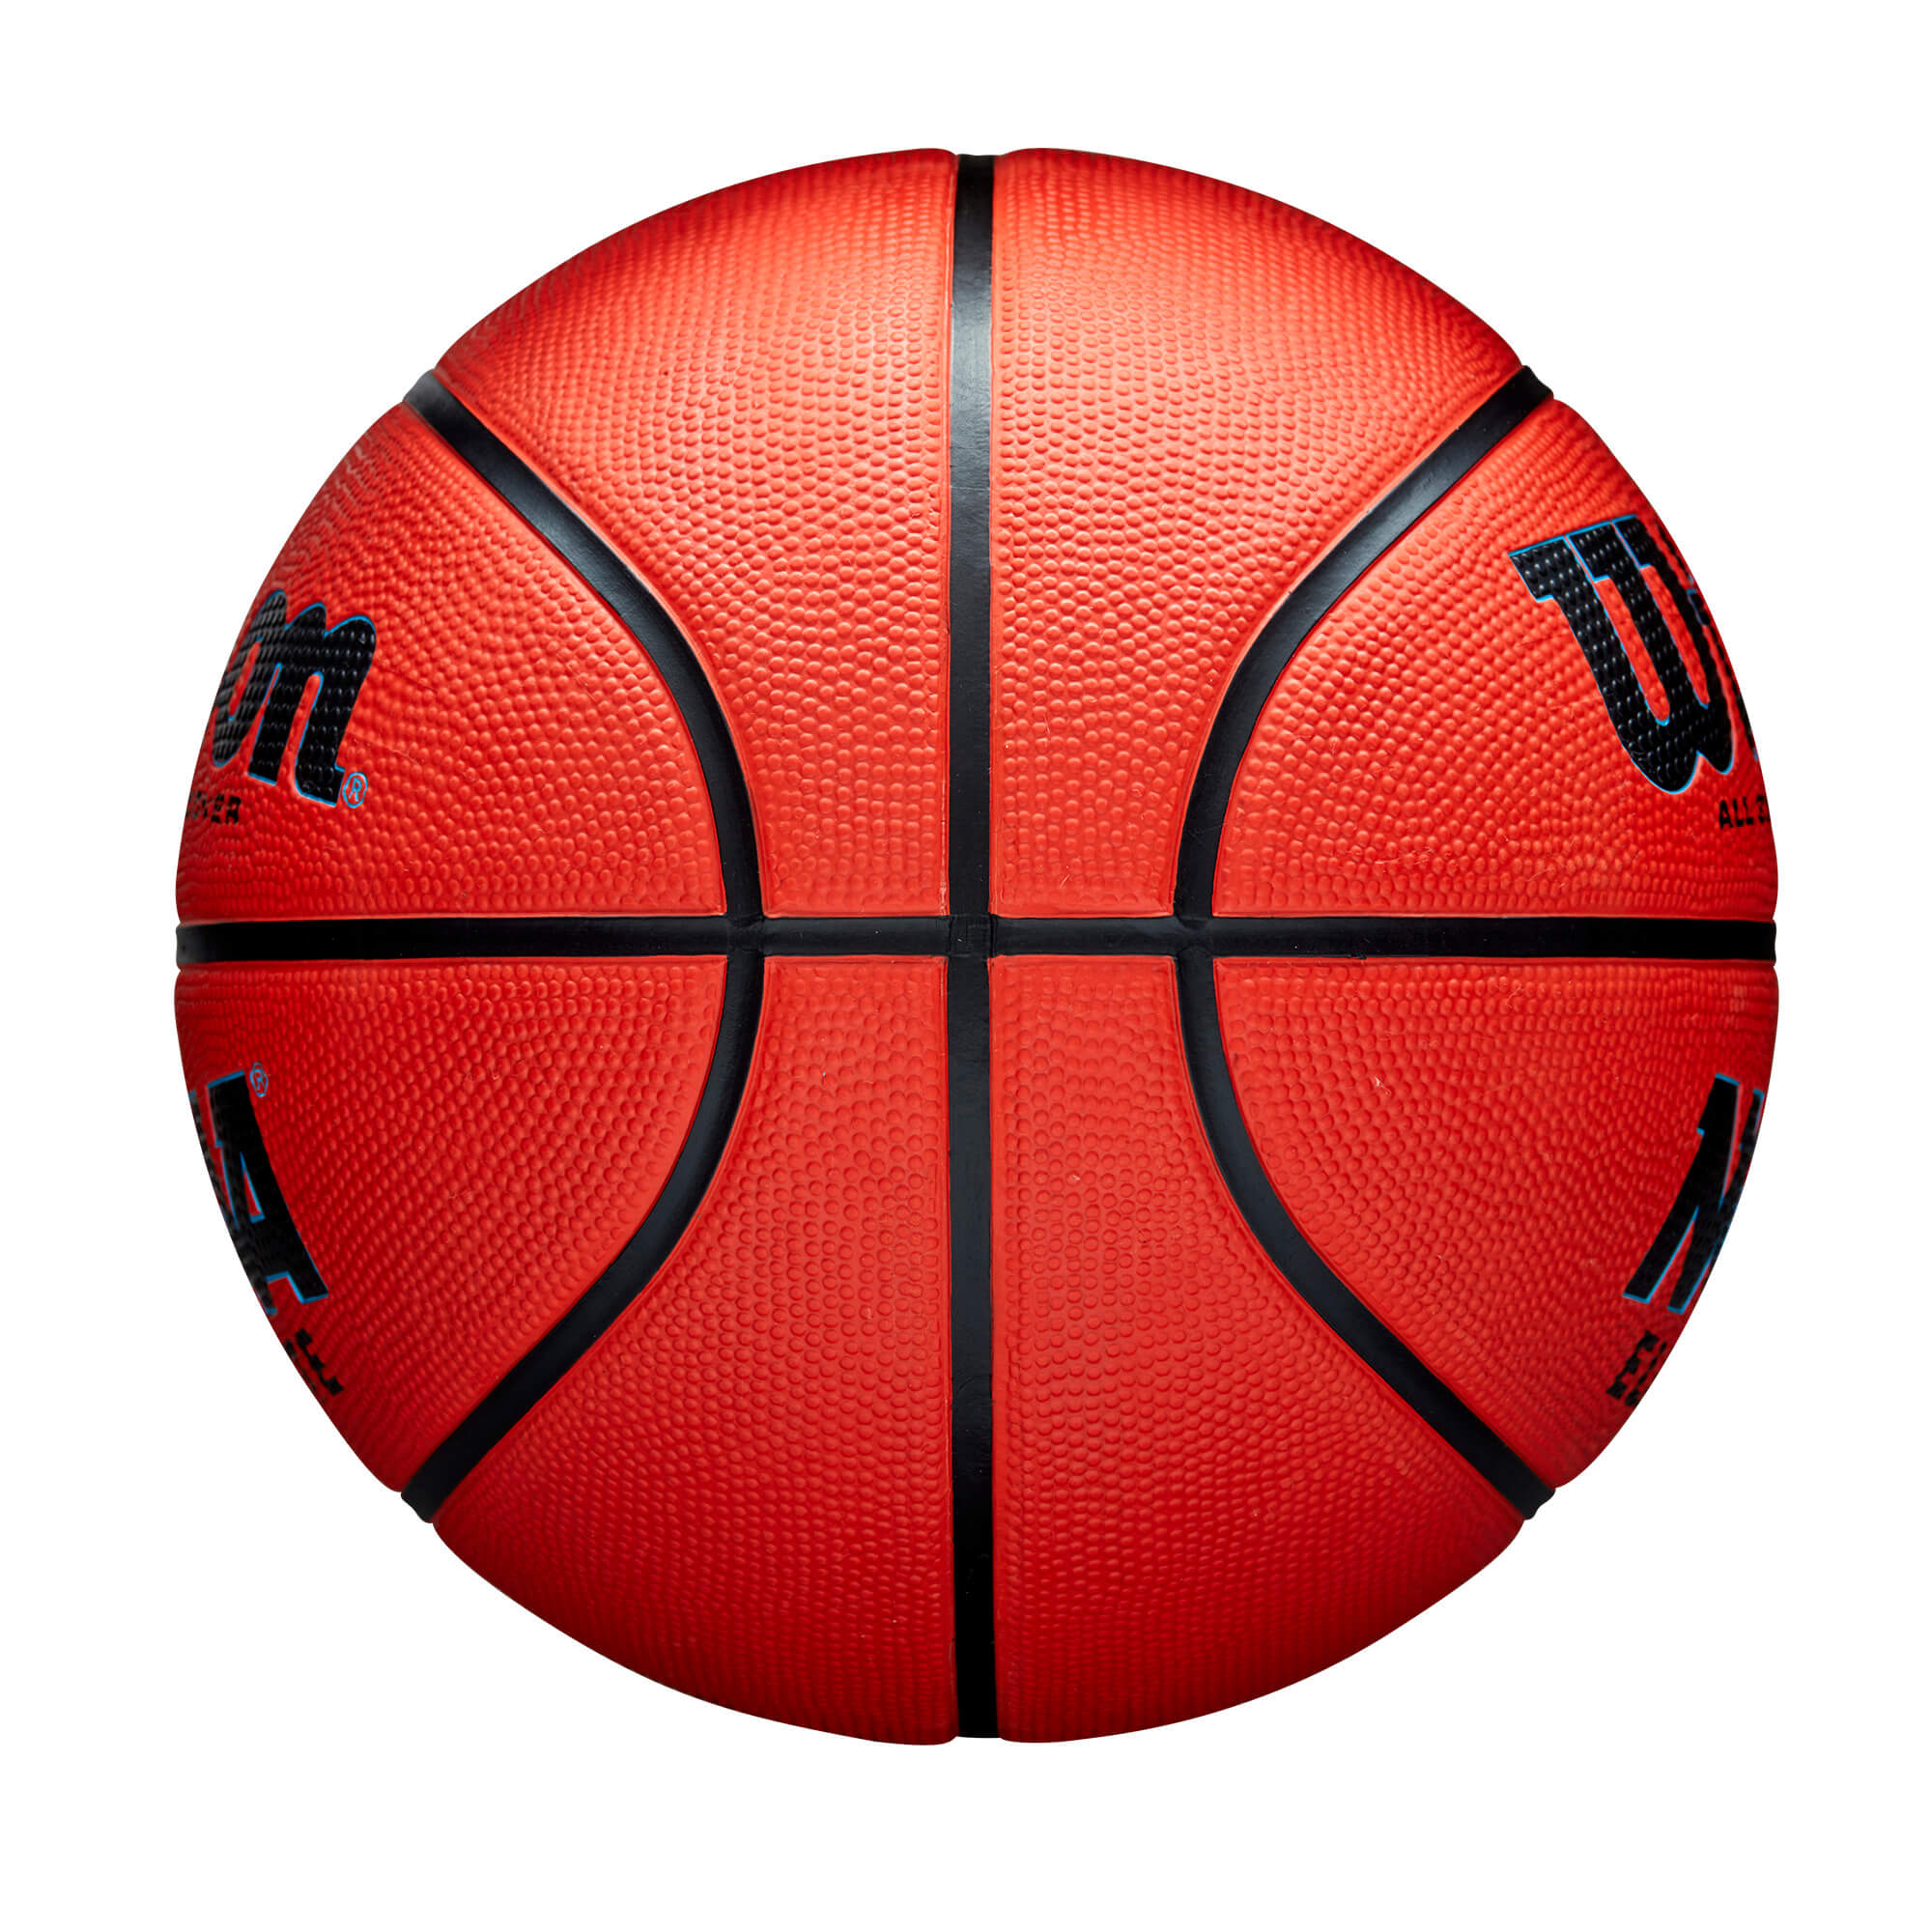 Ballons de basket NCAA Elevate classic